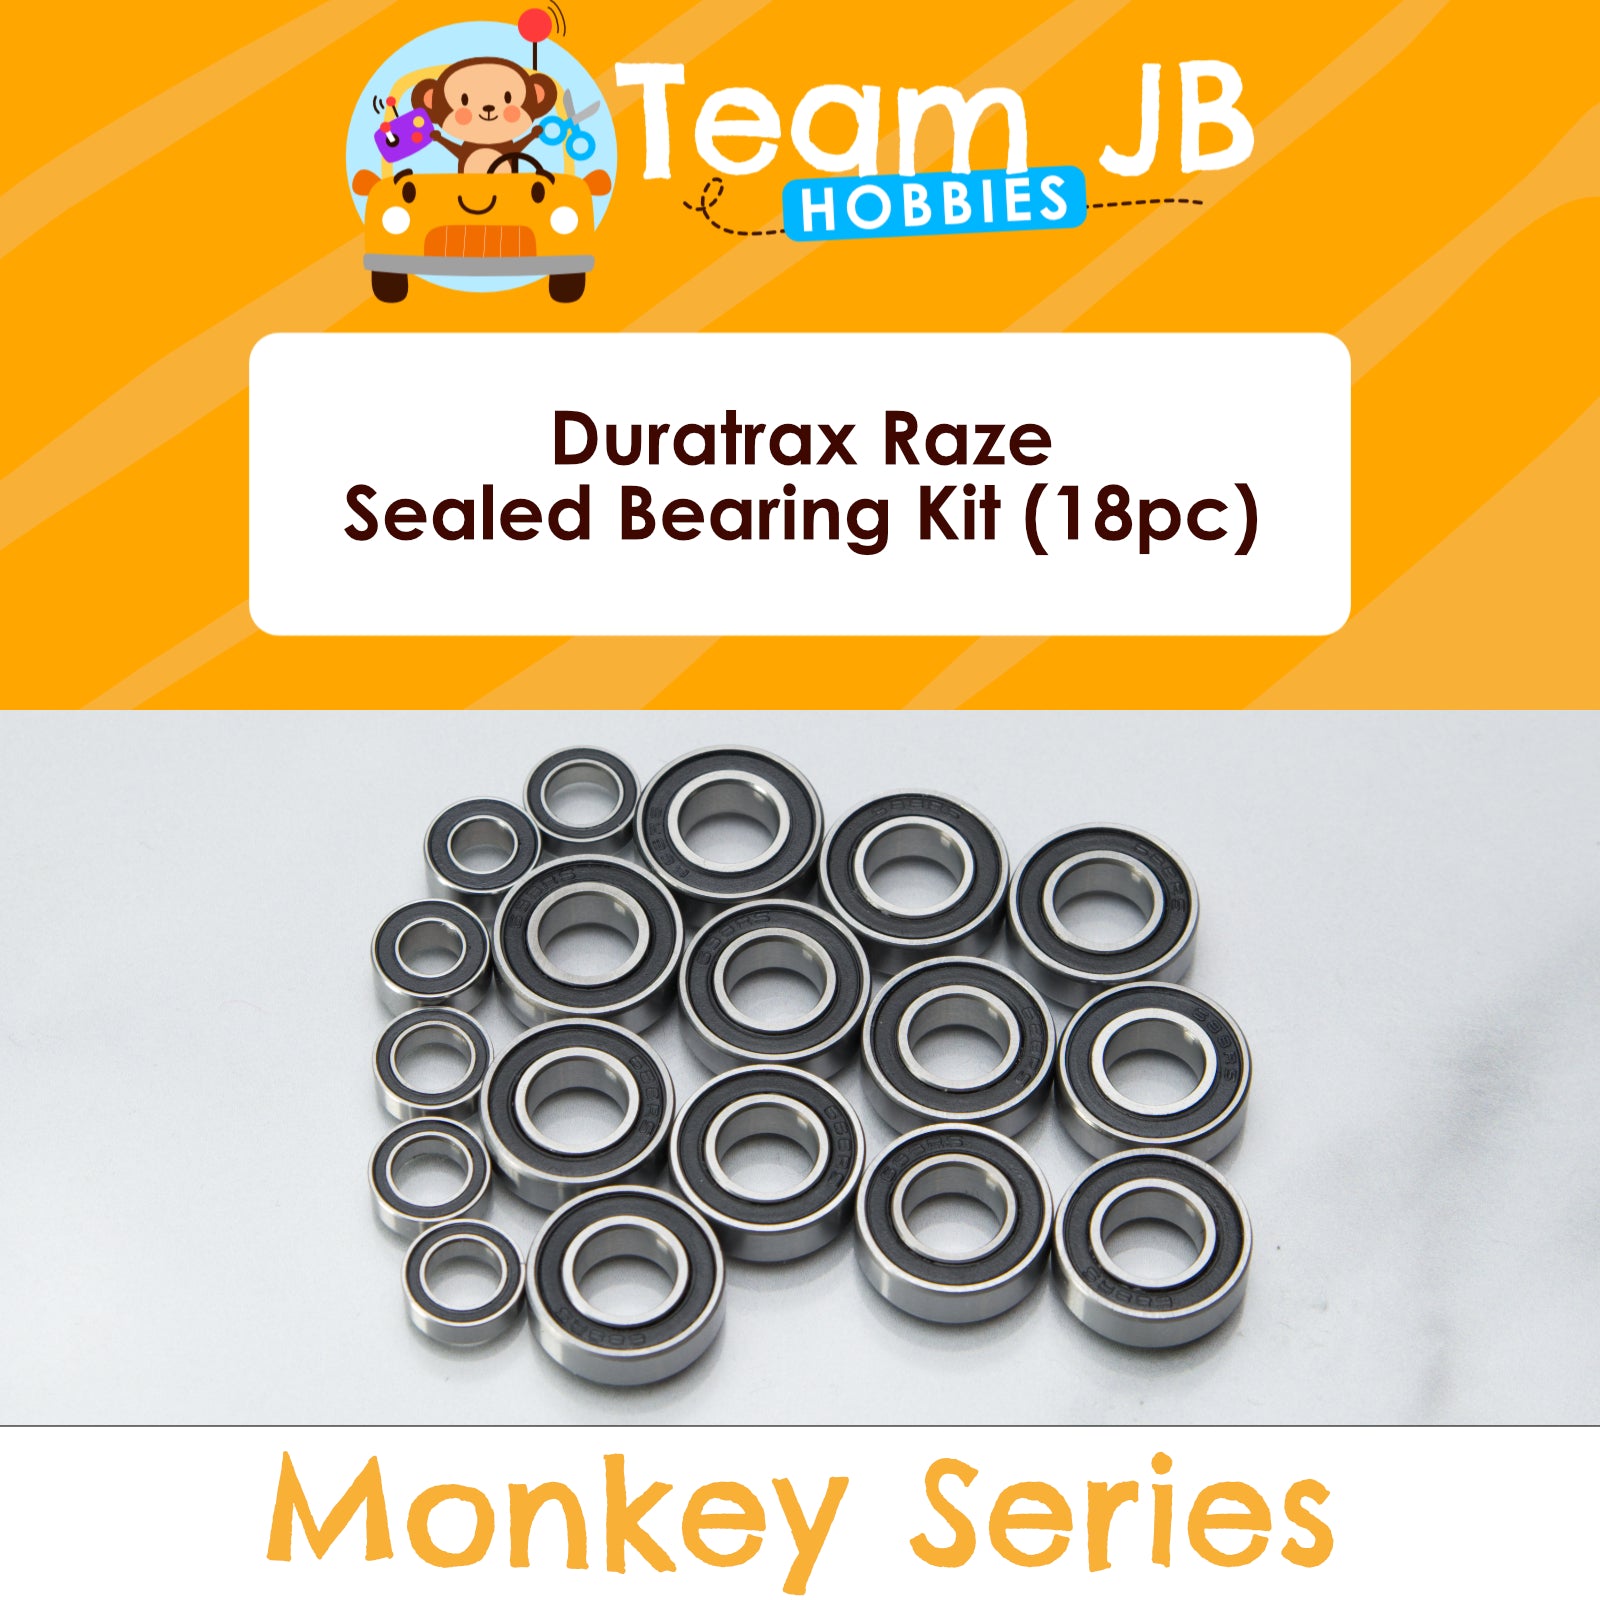 Duratrax Raze - Sealed Bearing Kit